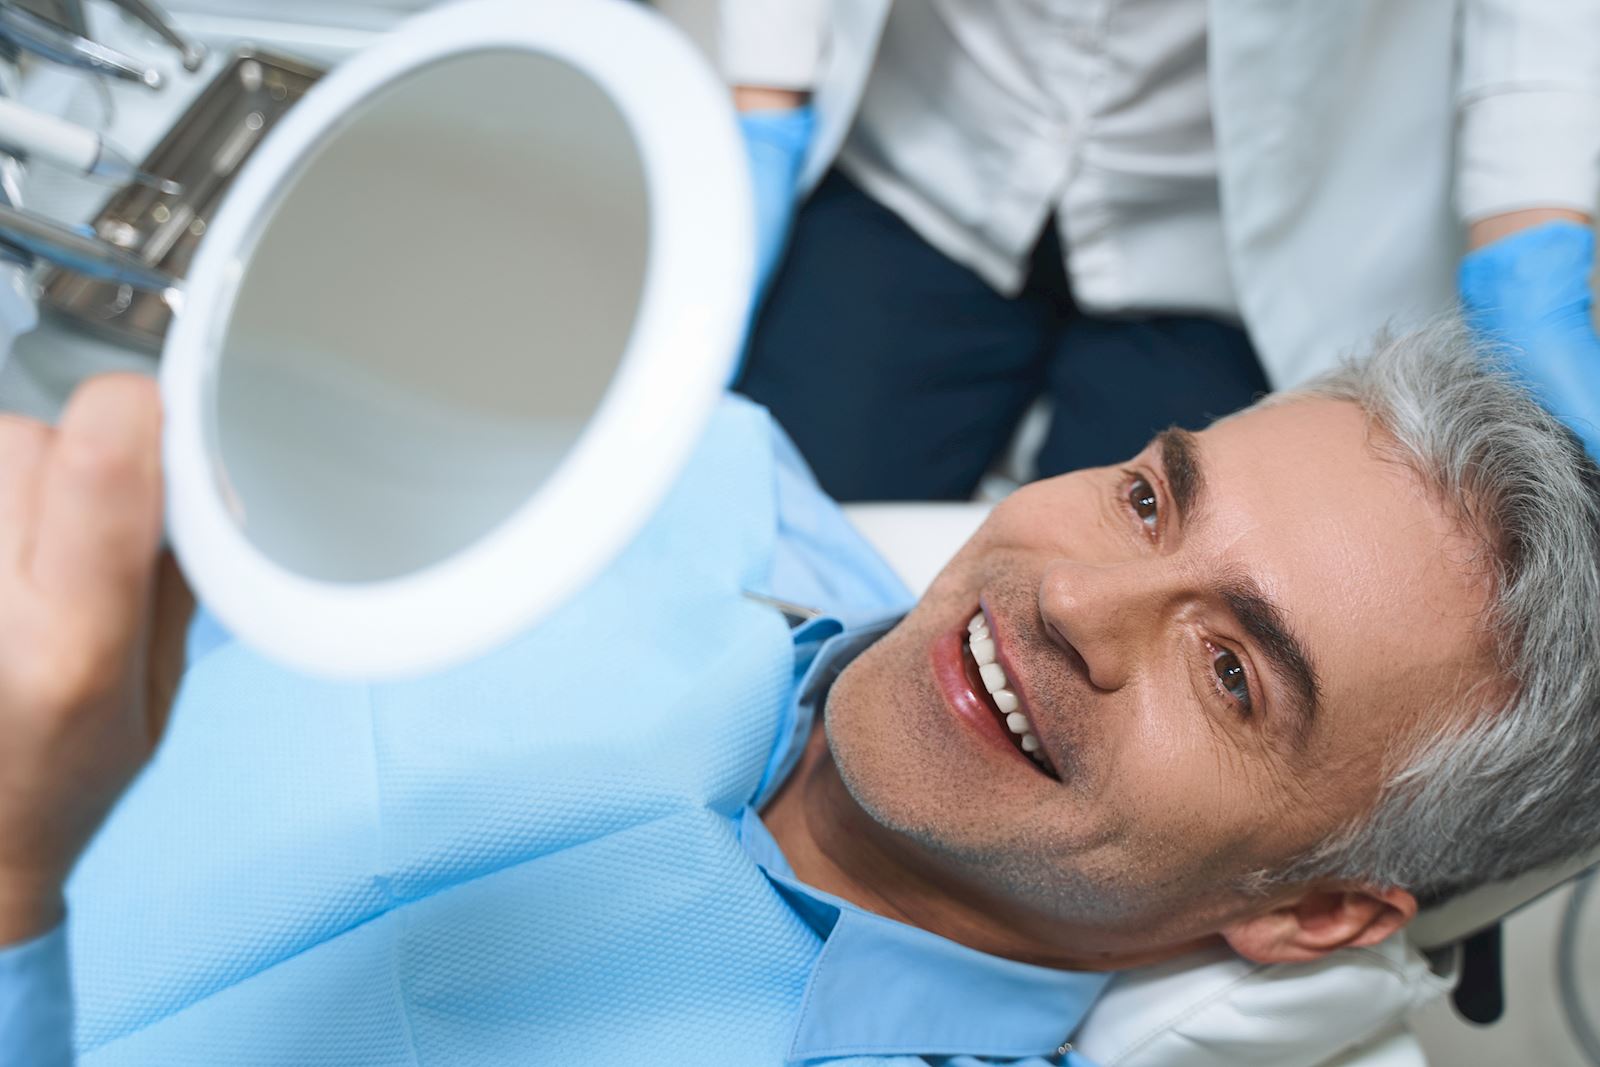 Man admiring dental work in mirror after dentist appointment